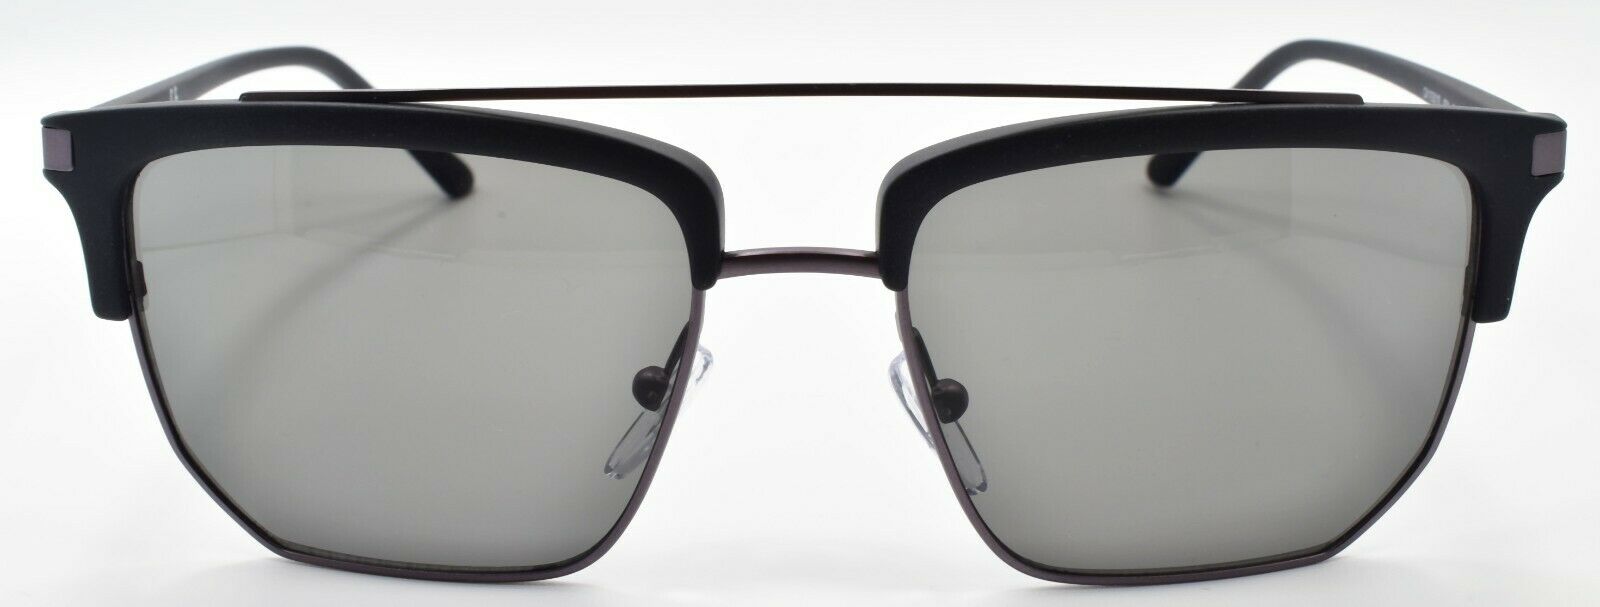 2-Calvin Klein CK19301S 001 Men's Sunglasses Aviator 54-18-140 Black / Gray-883901114058-IKSpecs